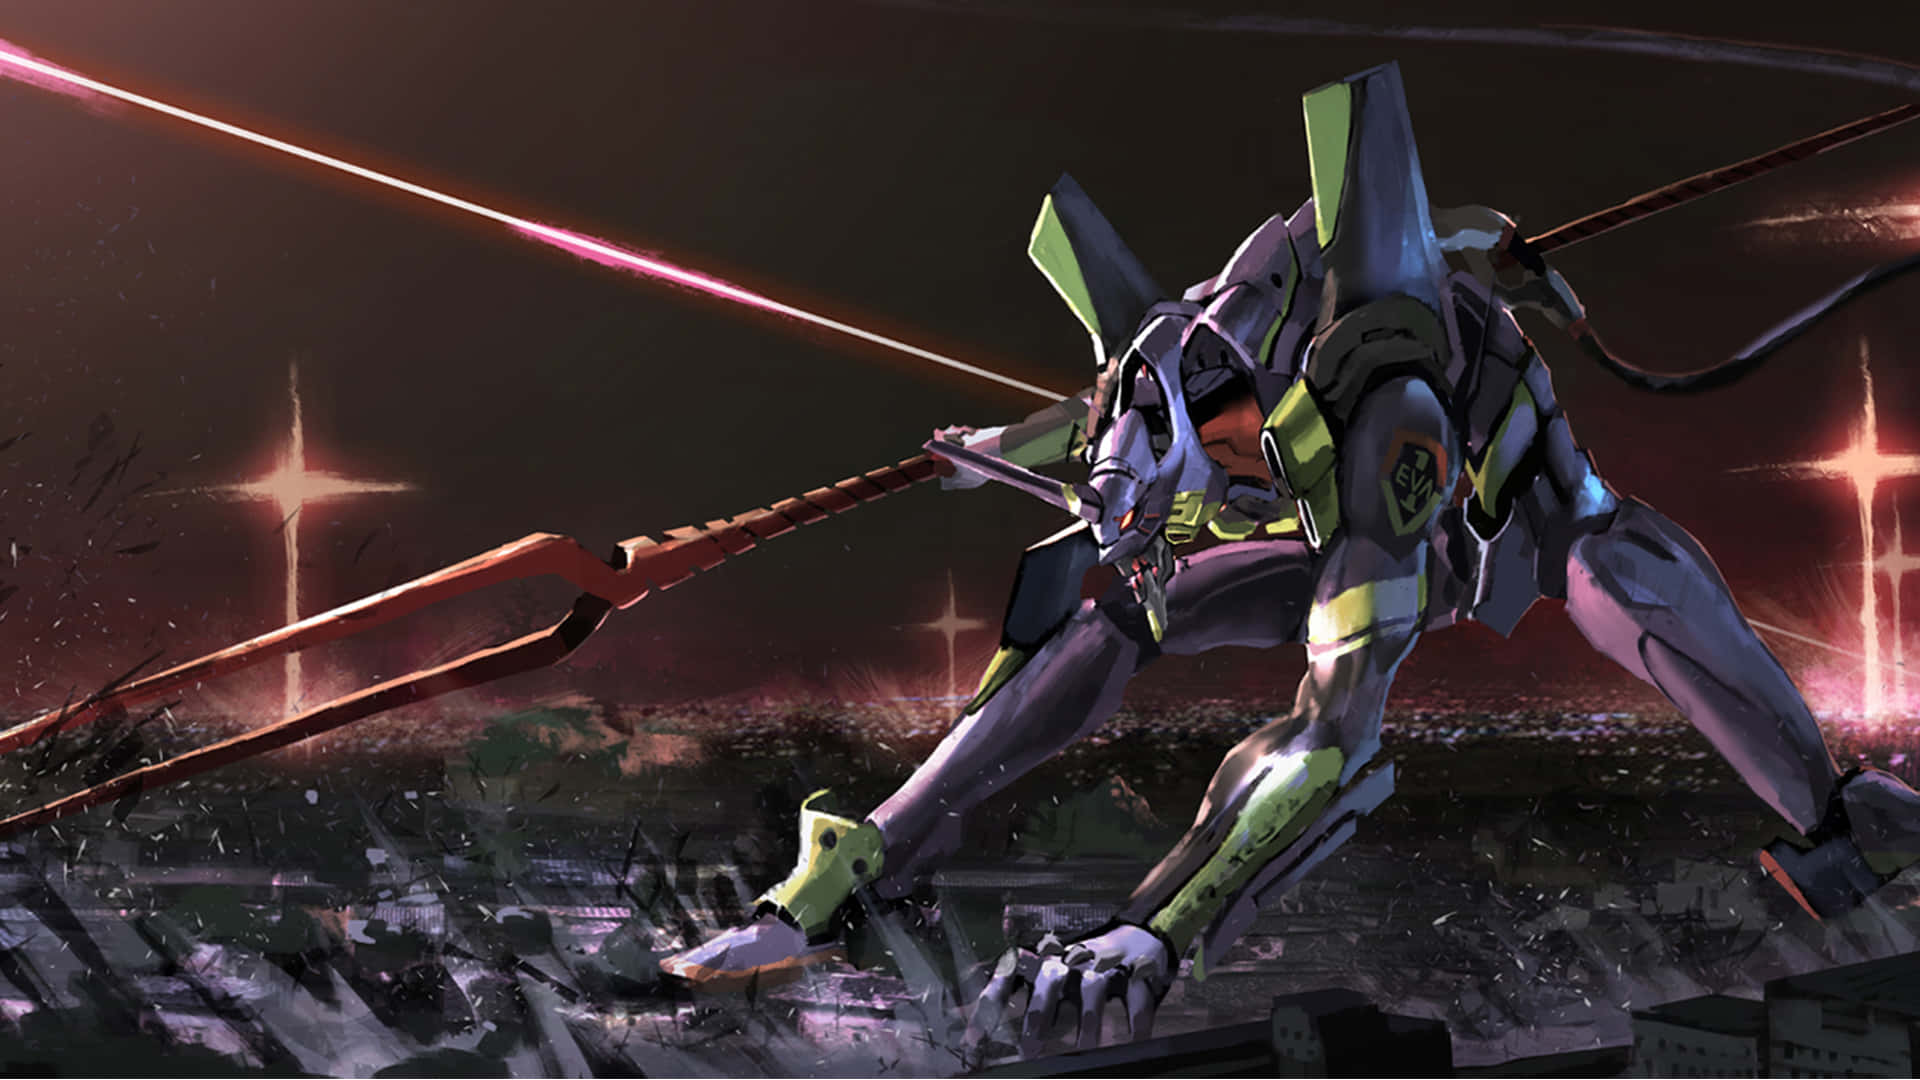 Shinji Ikari fights alongside Eva-01 to protect Tokyo-3 from invading Angels